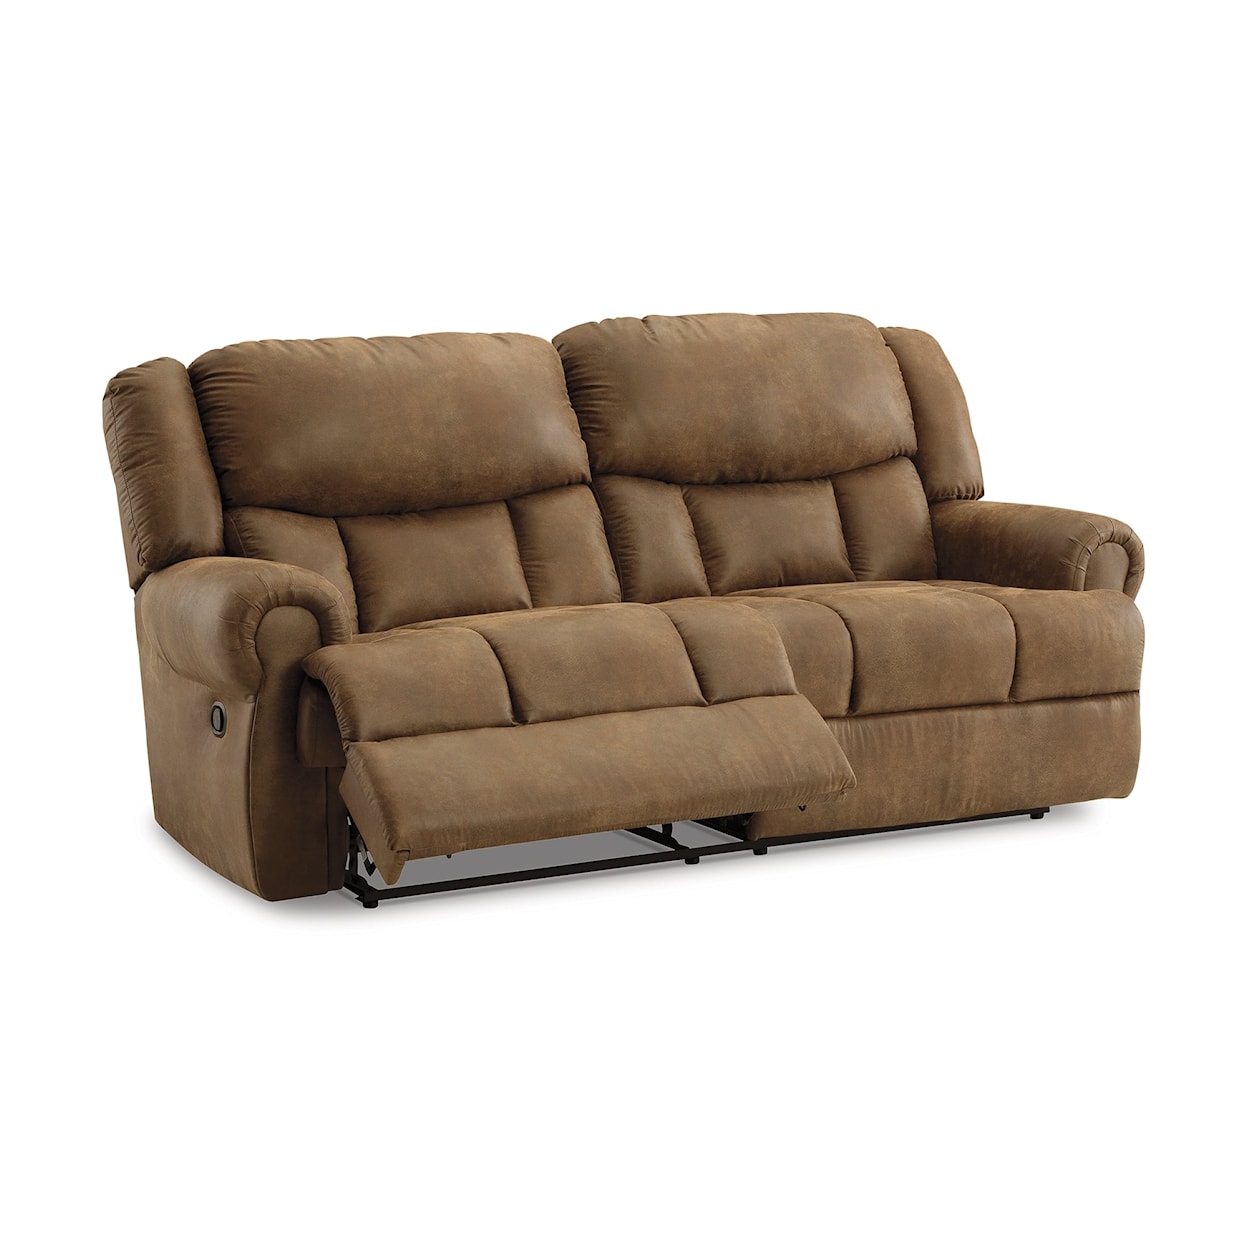 Ashley Furniture Signature Design Boothbay 2 Seat Reclining Sofa